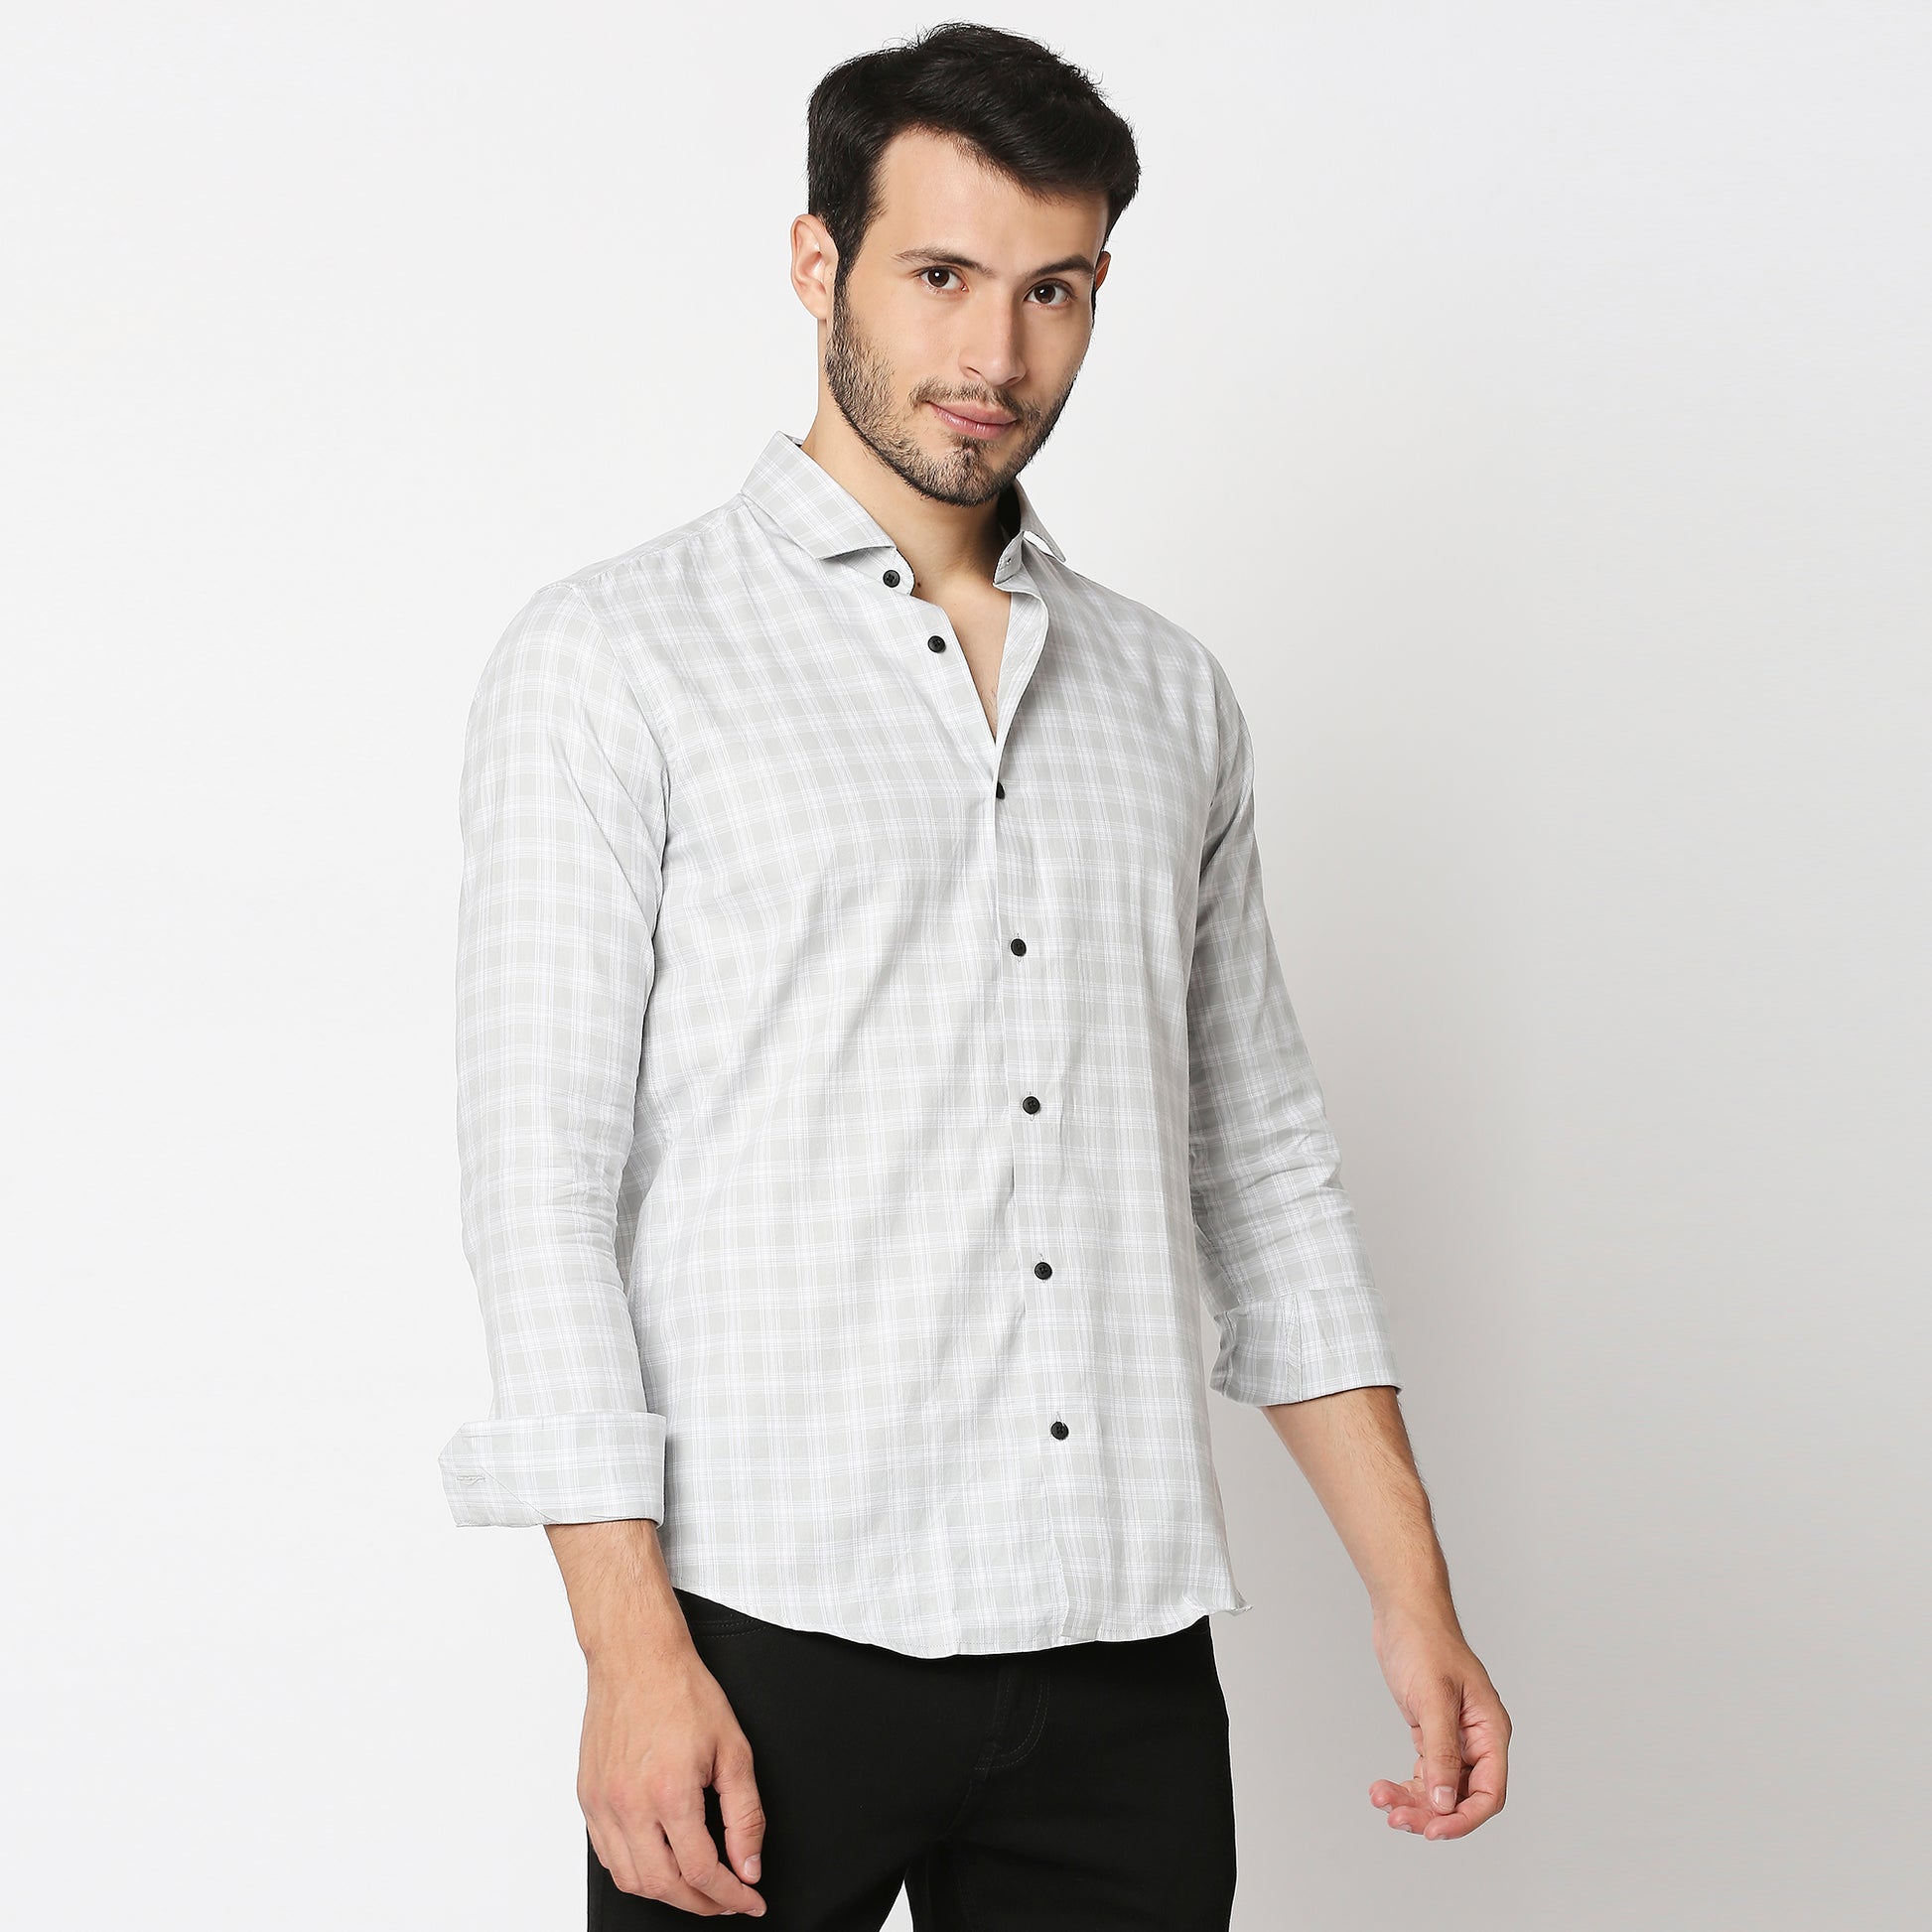 Fostino Grey  Checks  Full Sleeves Shirt - Fostino - Shirts & Tops